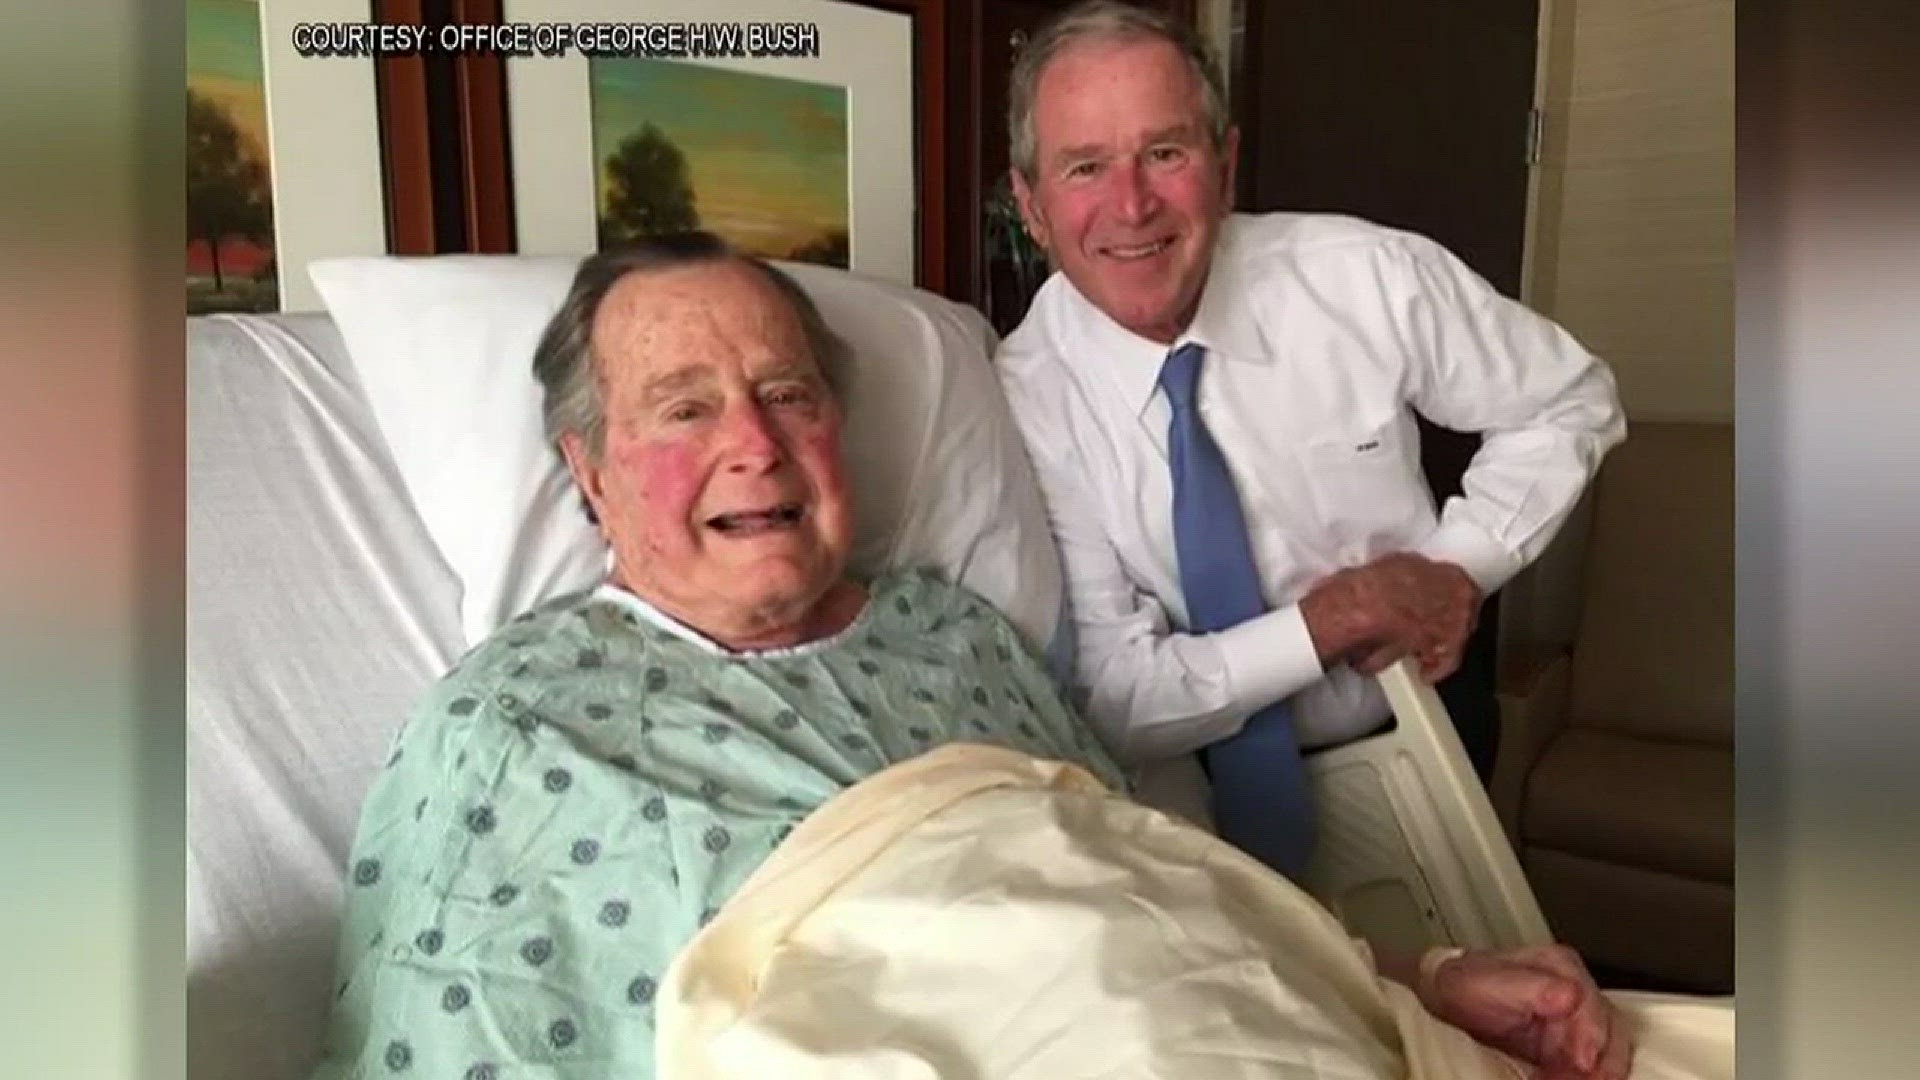 President George H.W. Bush "feels terrific," but he will remain in the hospital through this weekend, spokesman Jim McGrath said Friday.